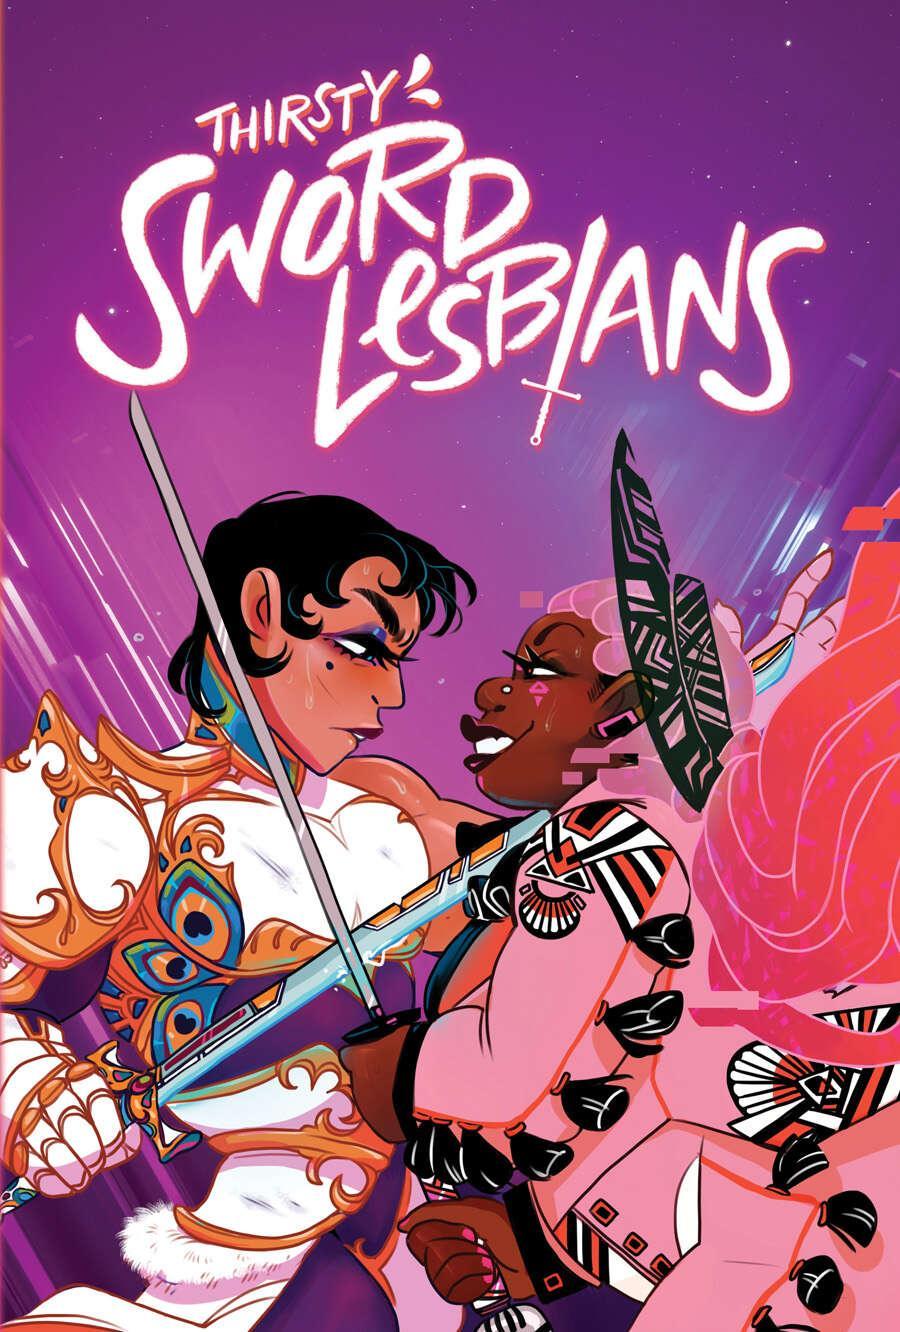 April Kit Walsh: Thirsty Sword Lesbians (2021)